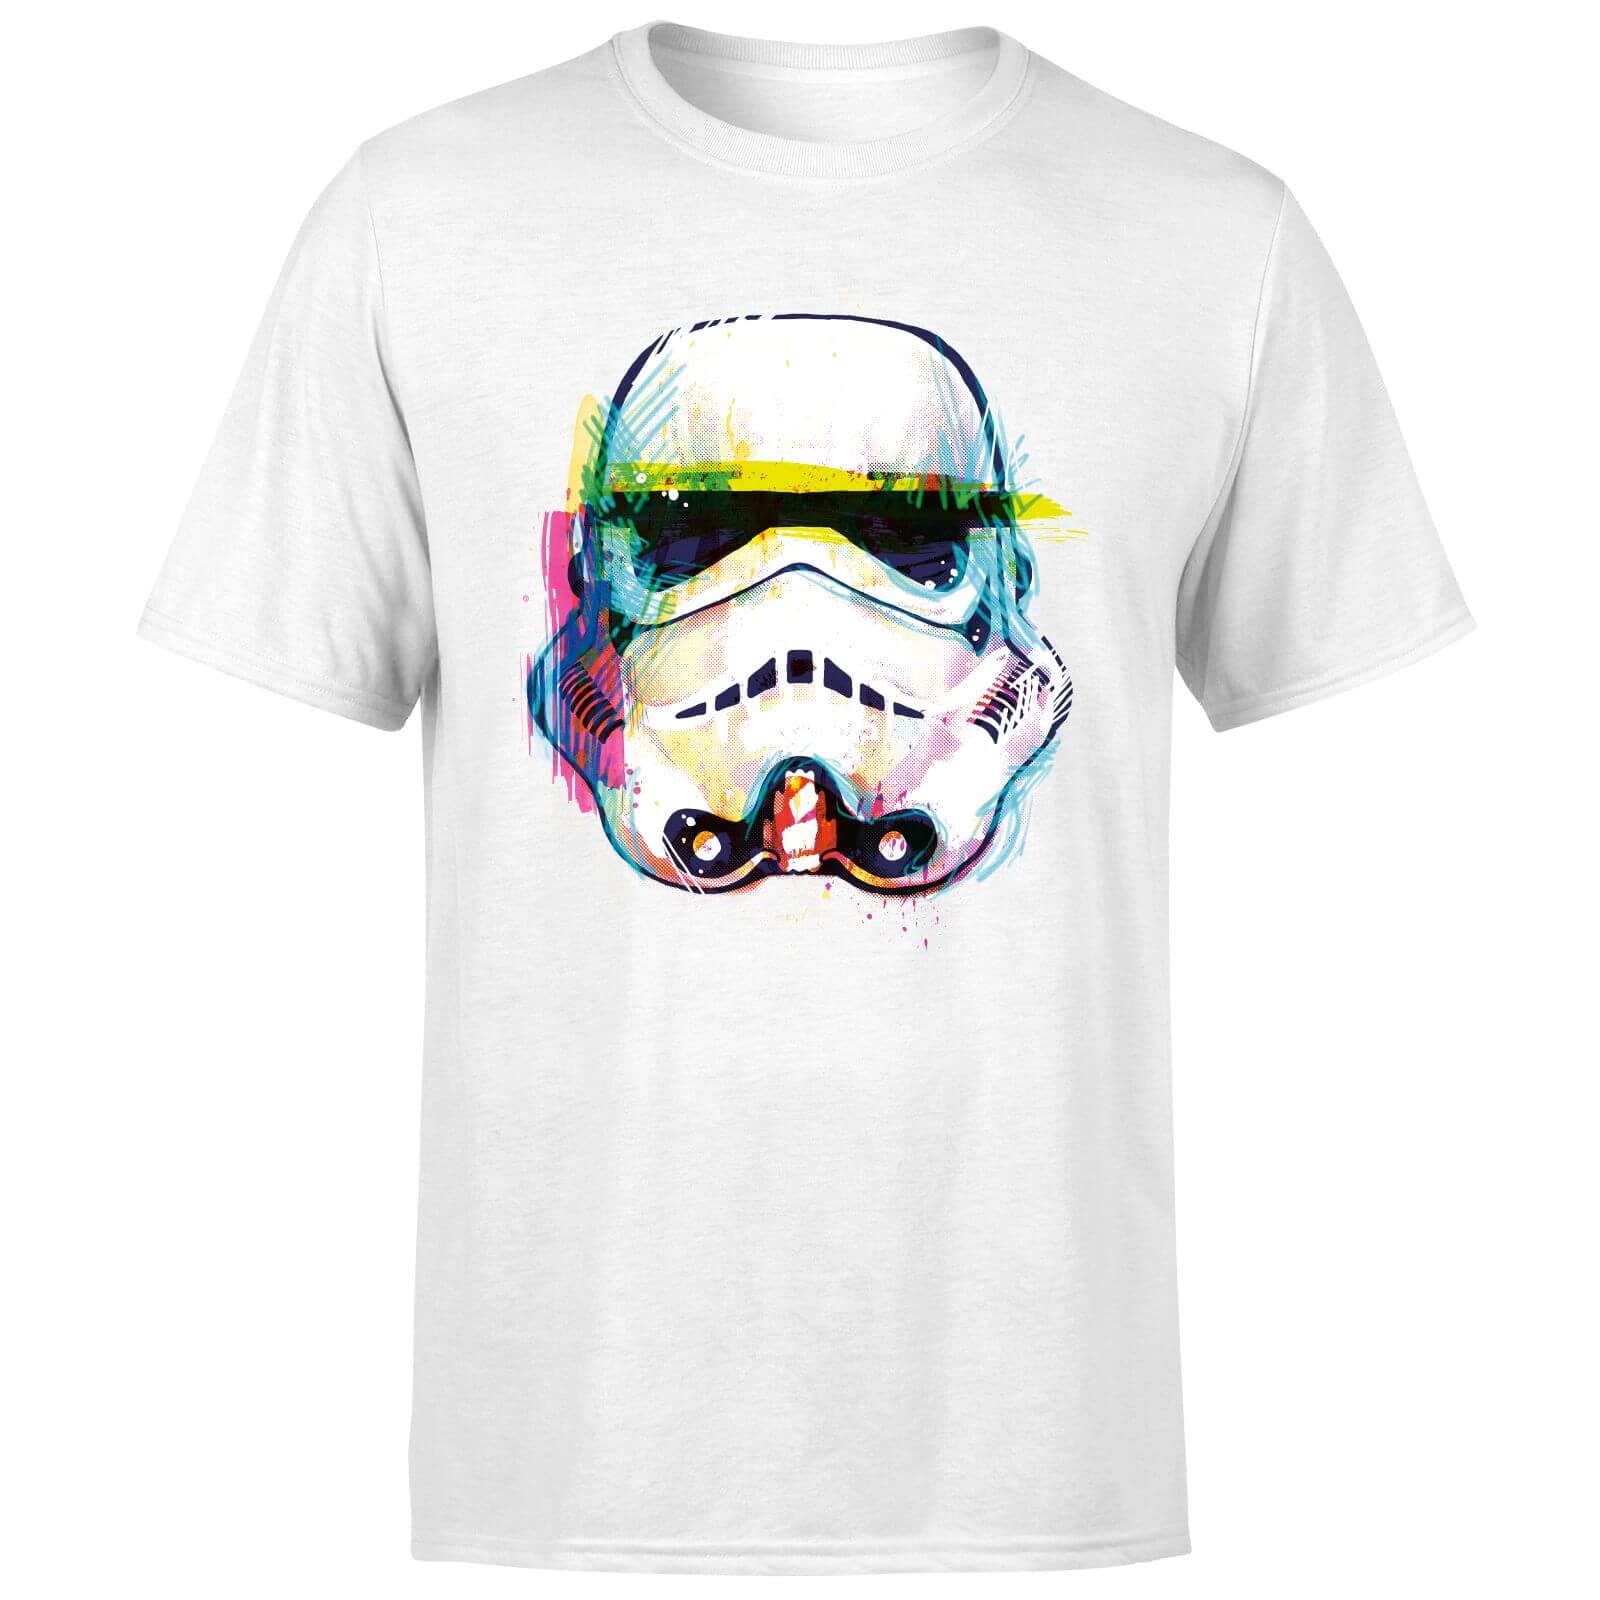 star wars stormtrooper shirt